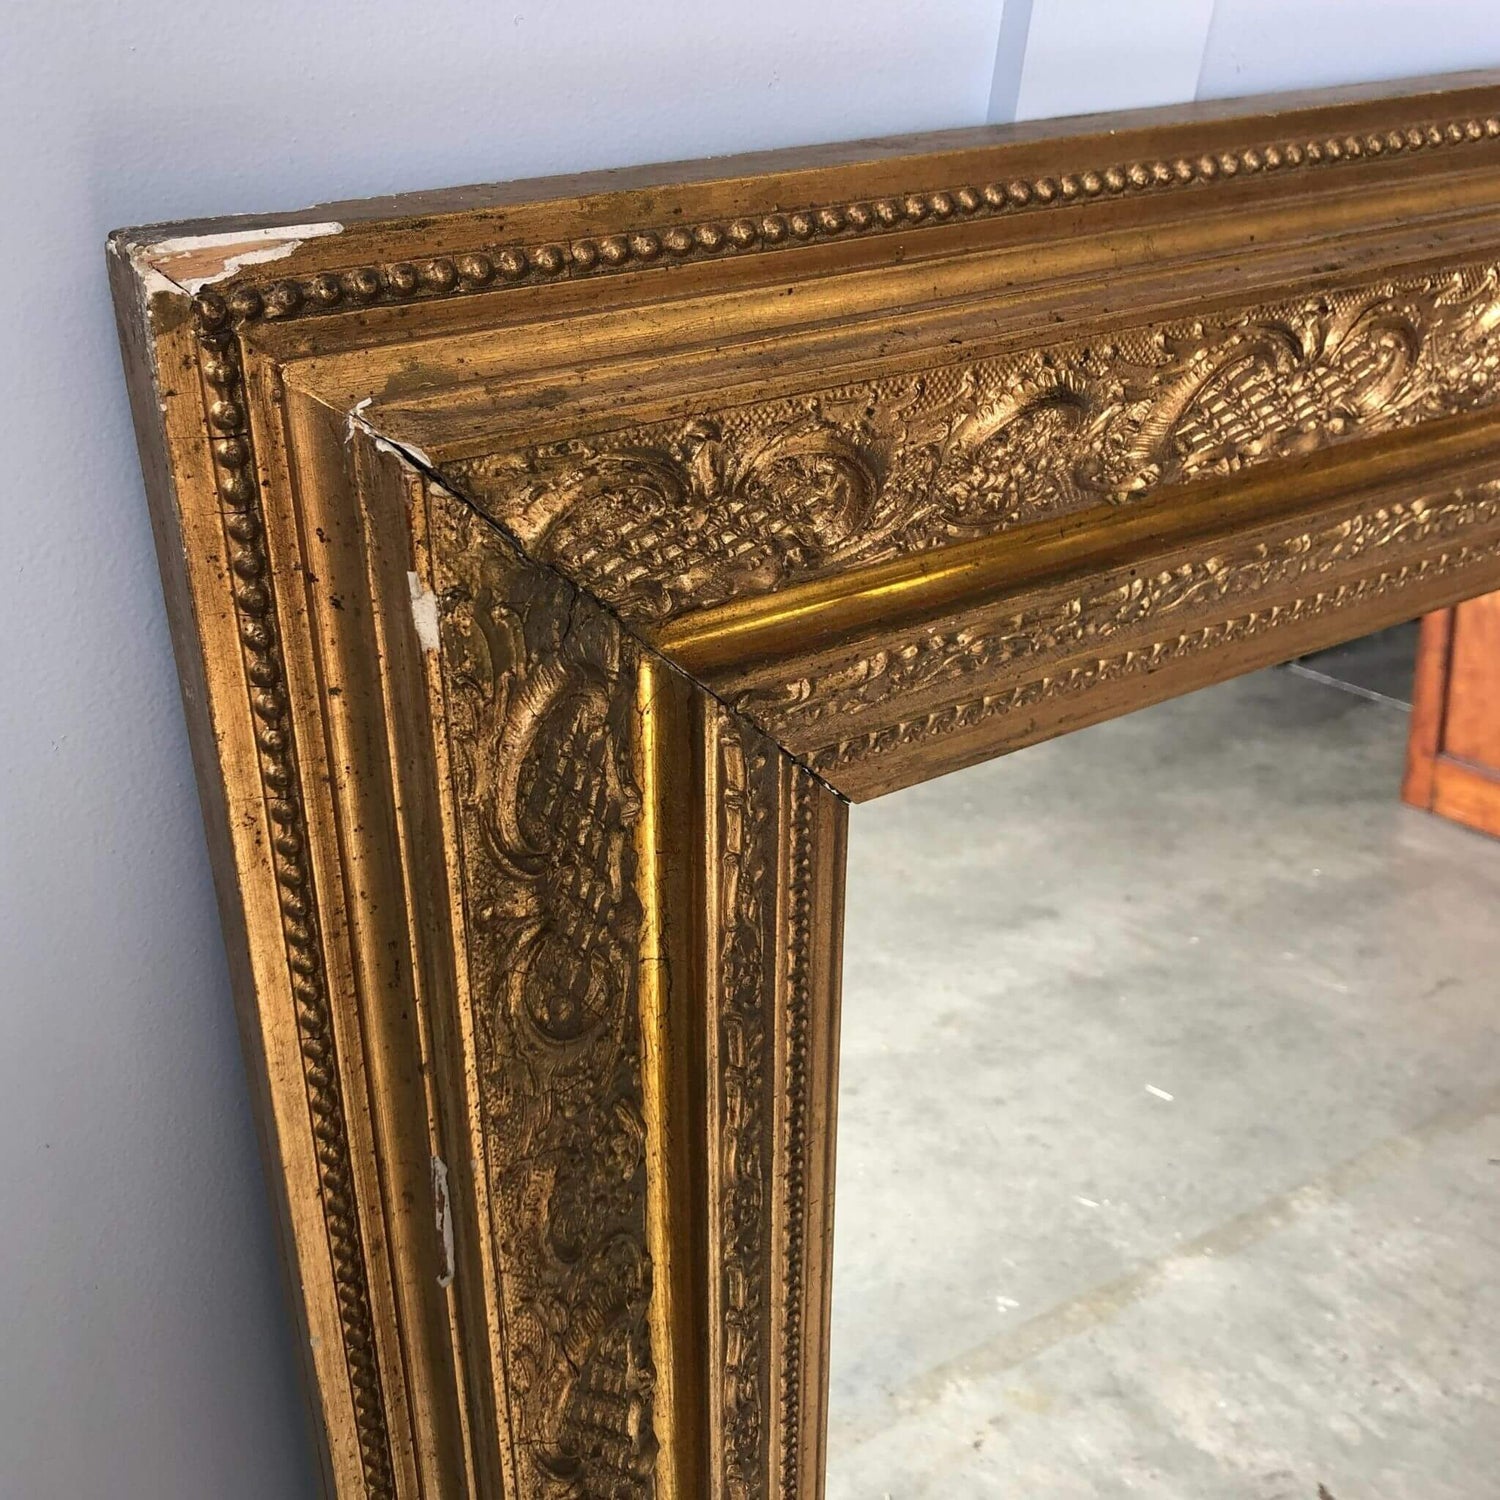 Stately antique mirror